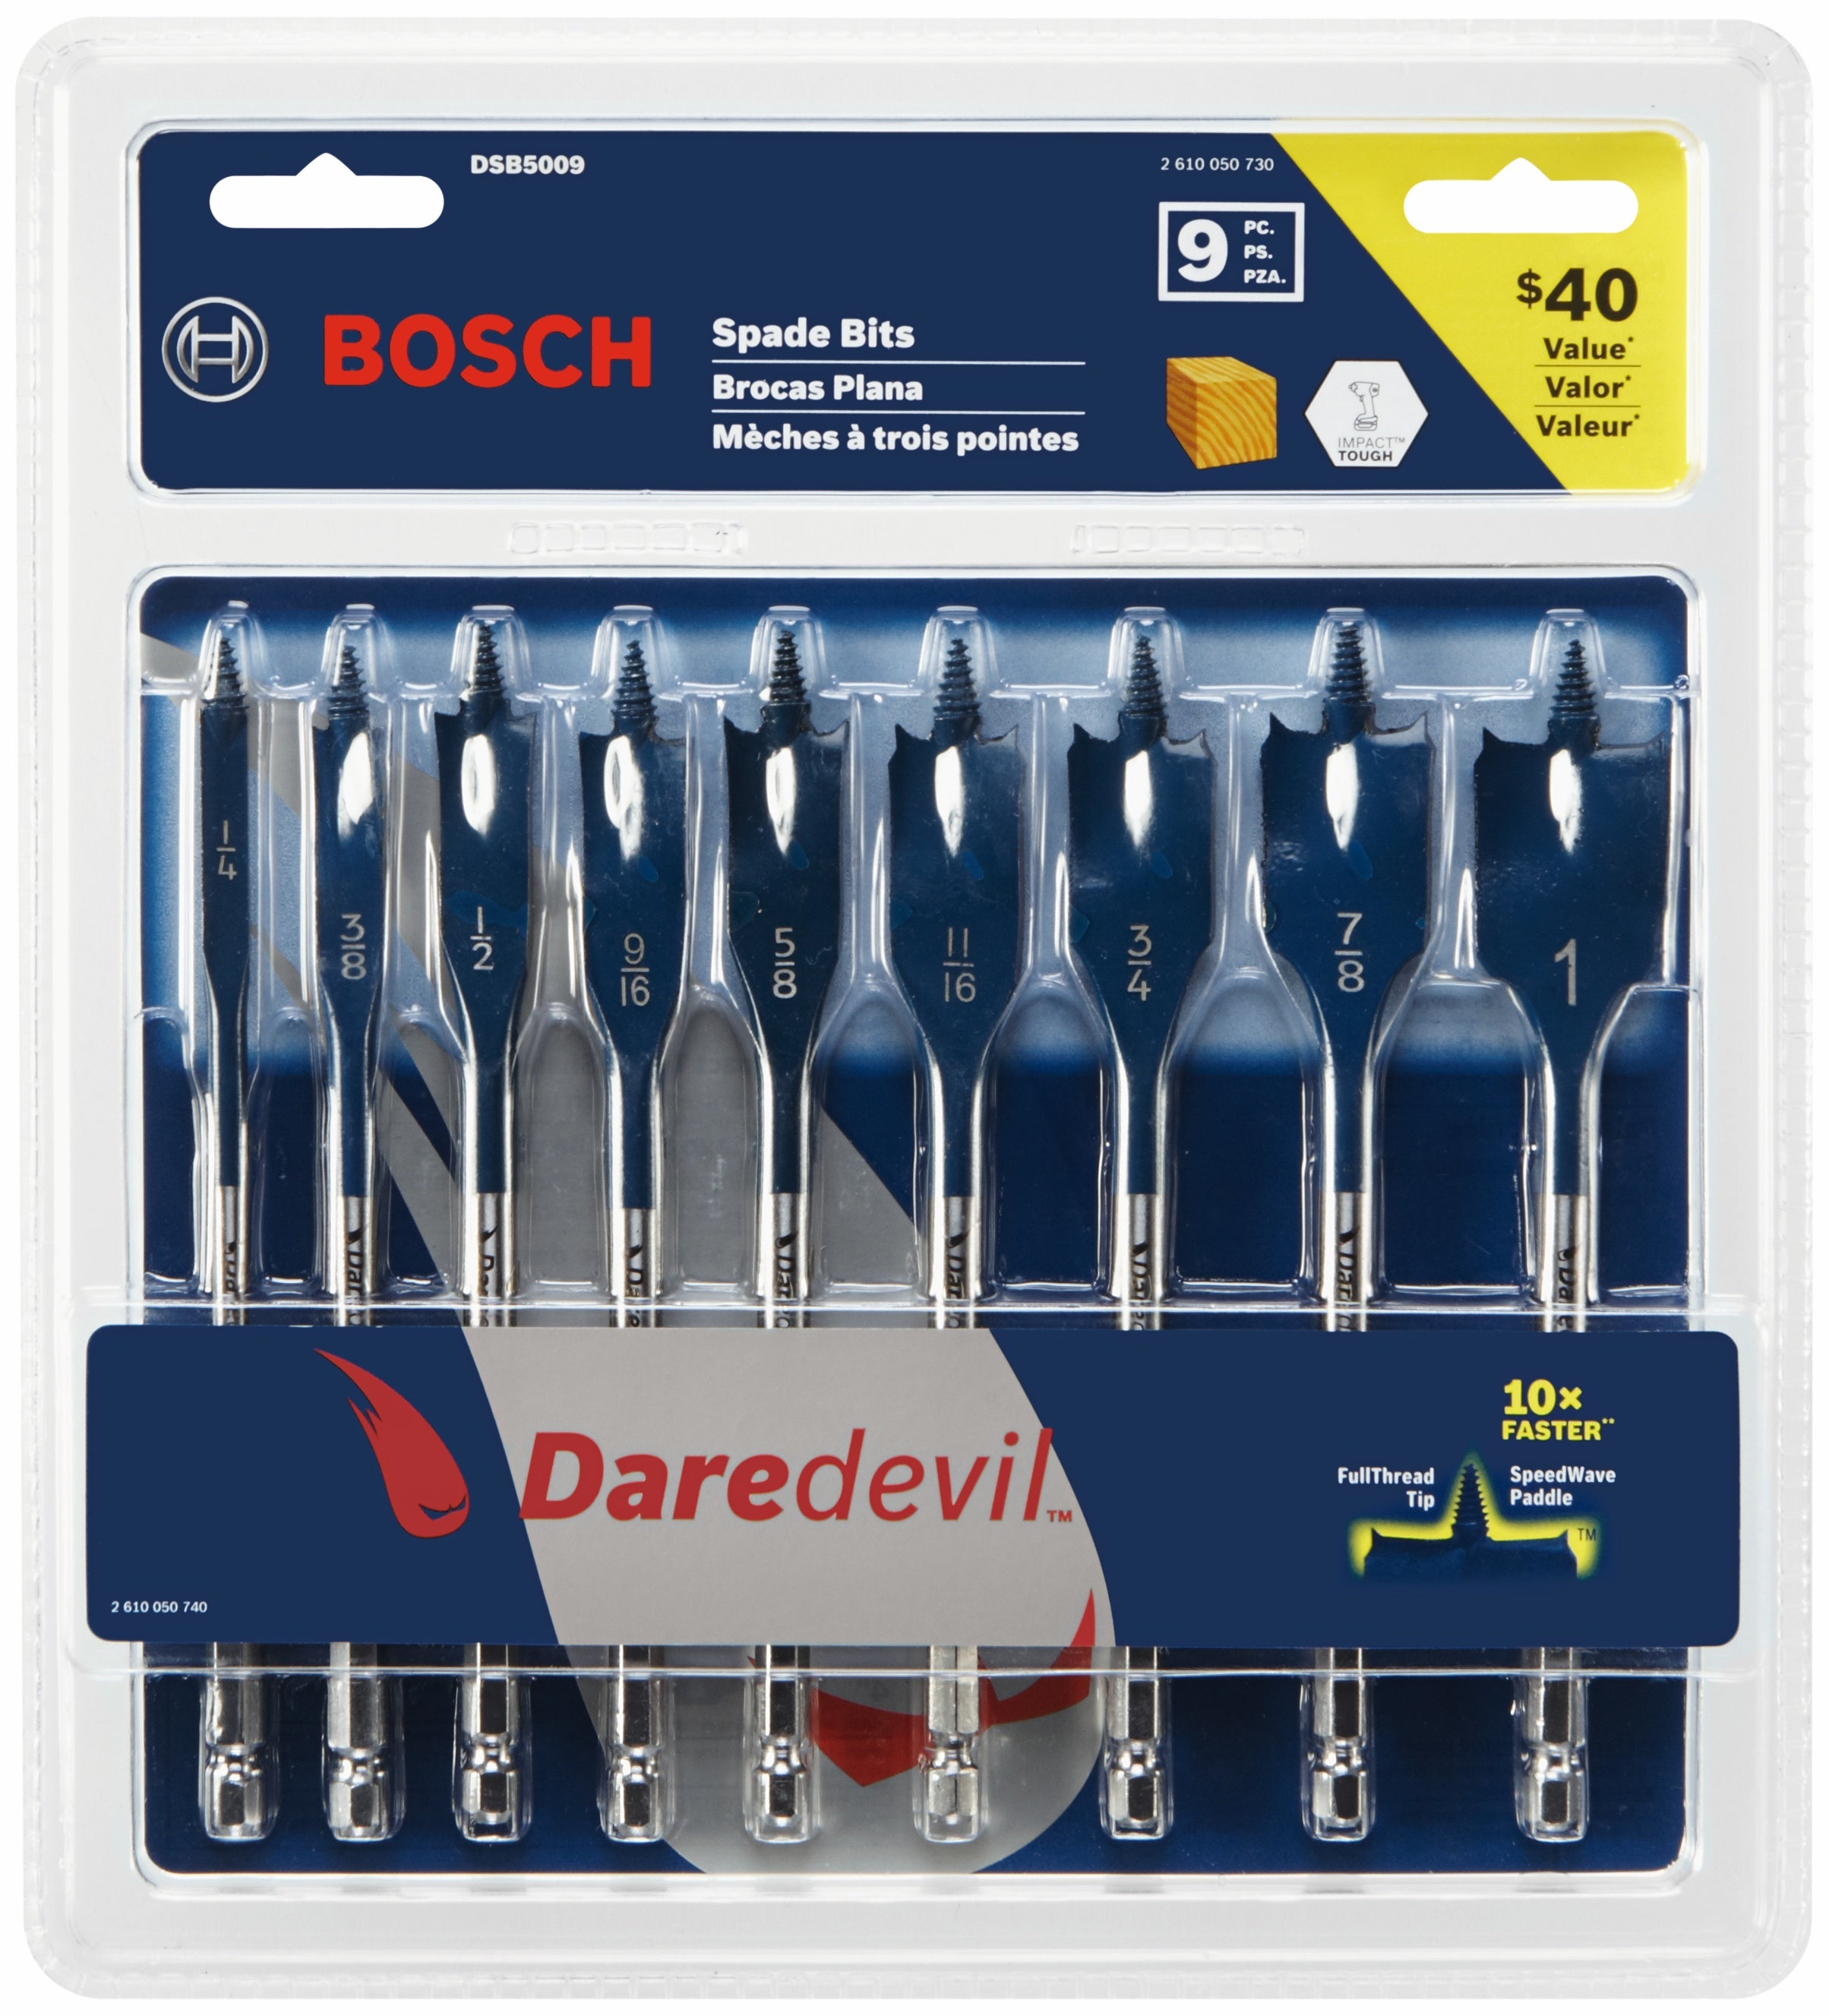 Bosch DSB5009 9 pc. Daredevil® Spade Bit Set